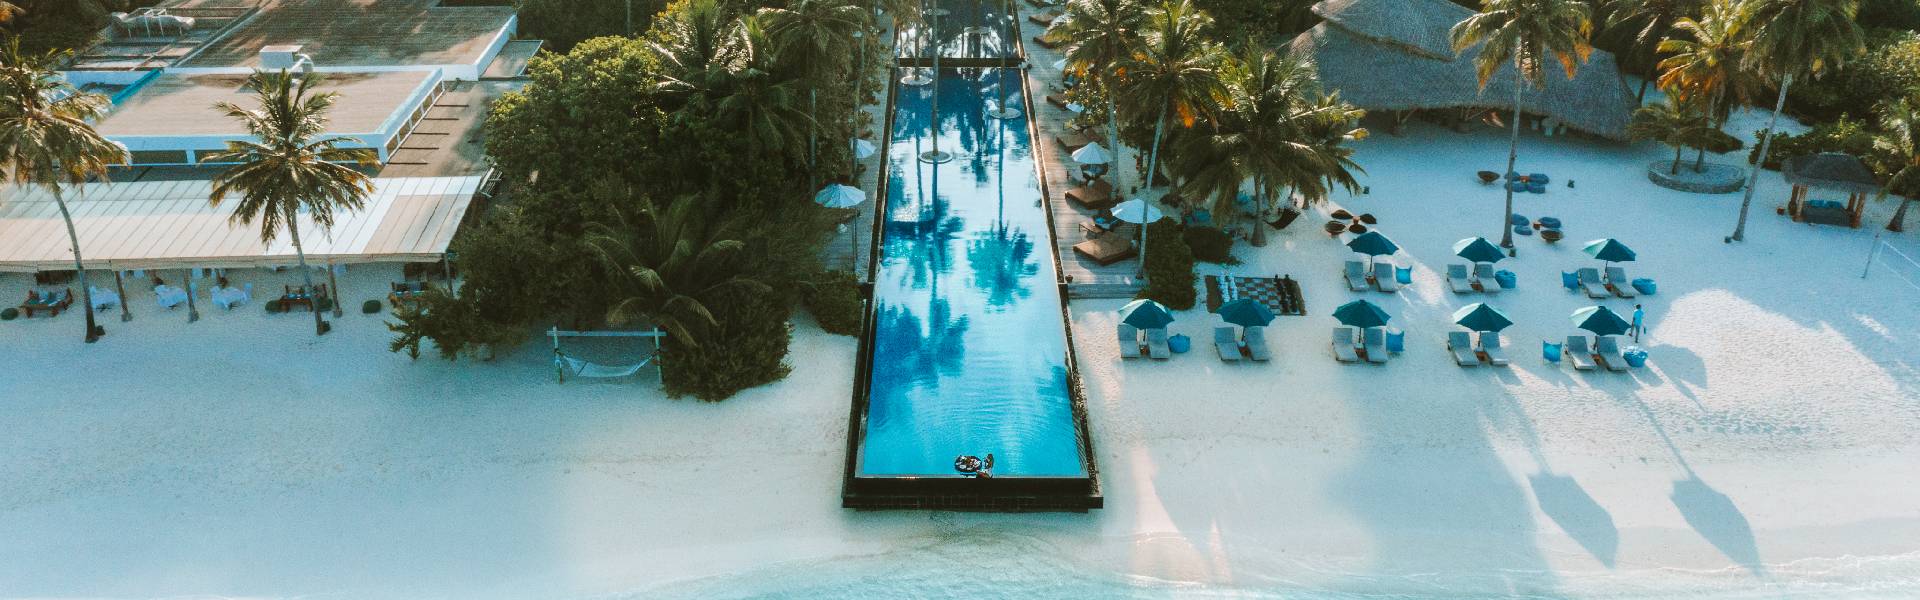 Fairmont Maldives swimming pool & beach